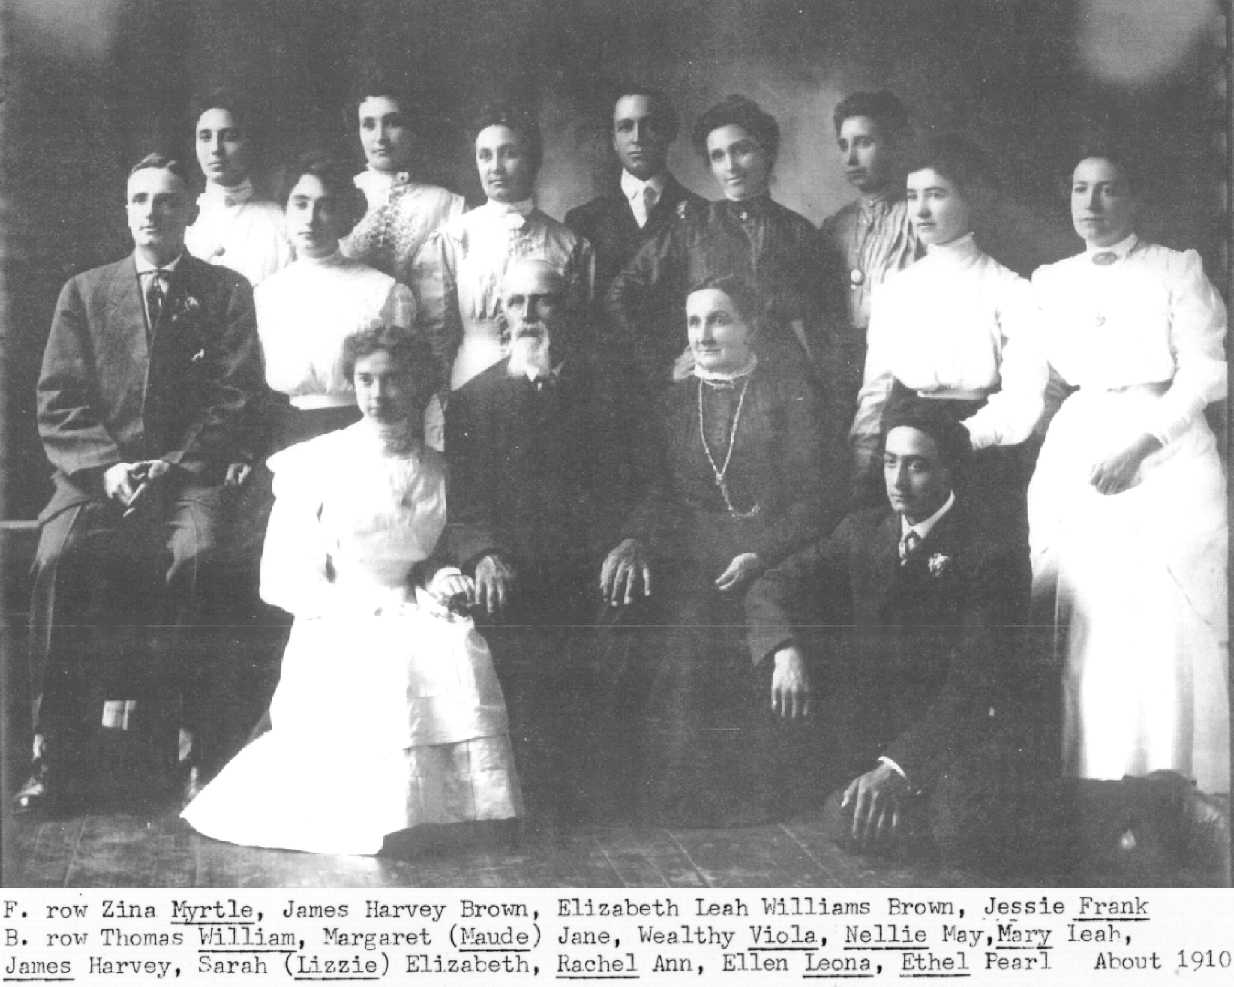 James Harvey and Elizabeth Leah Williams Brown Family c. 1910